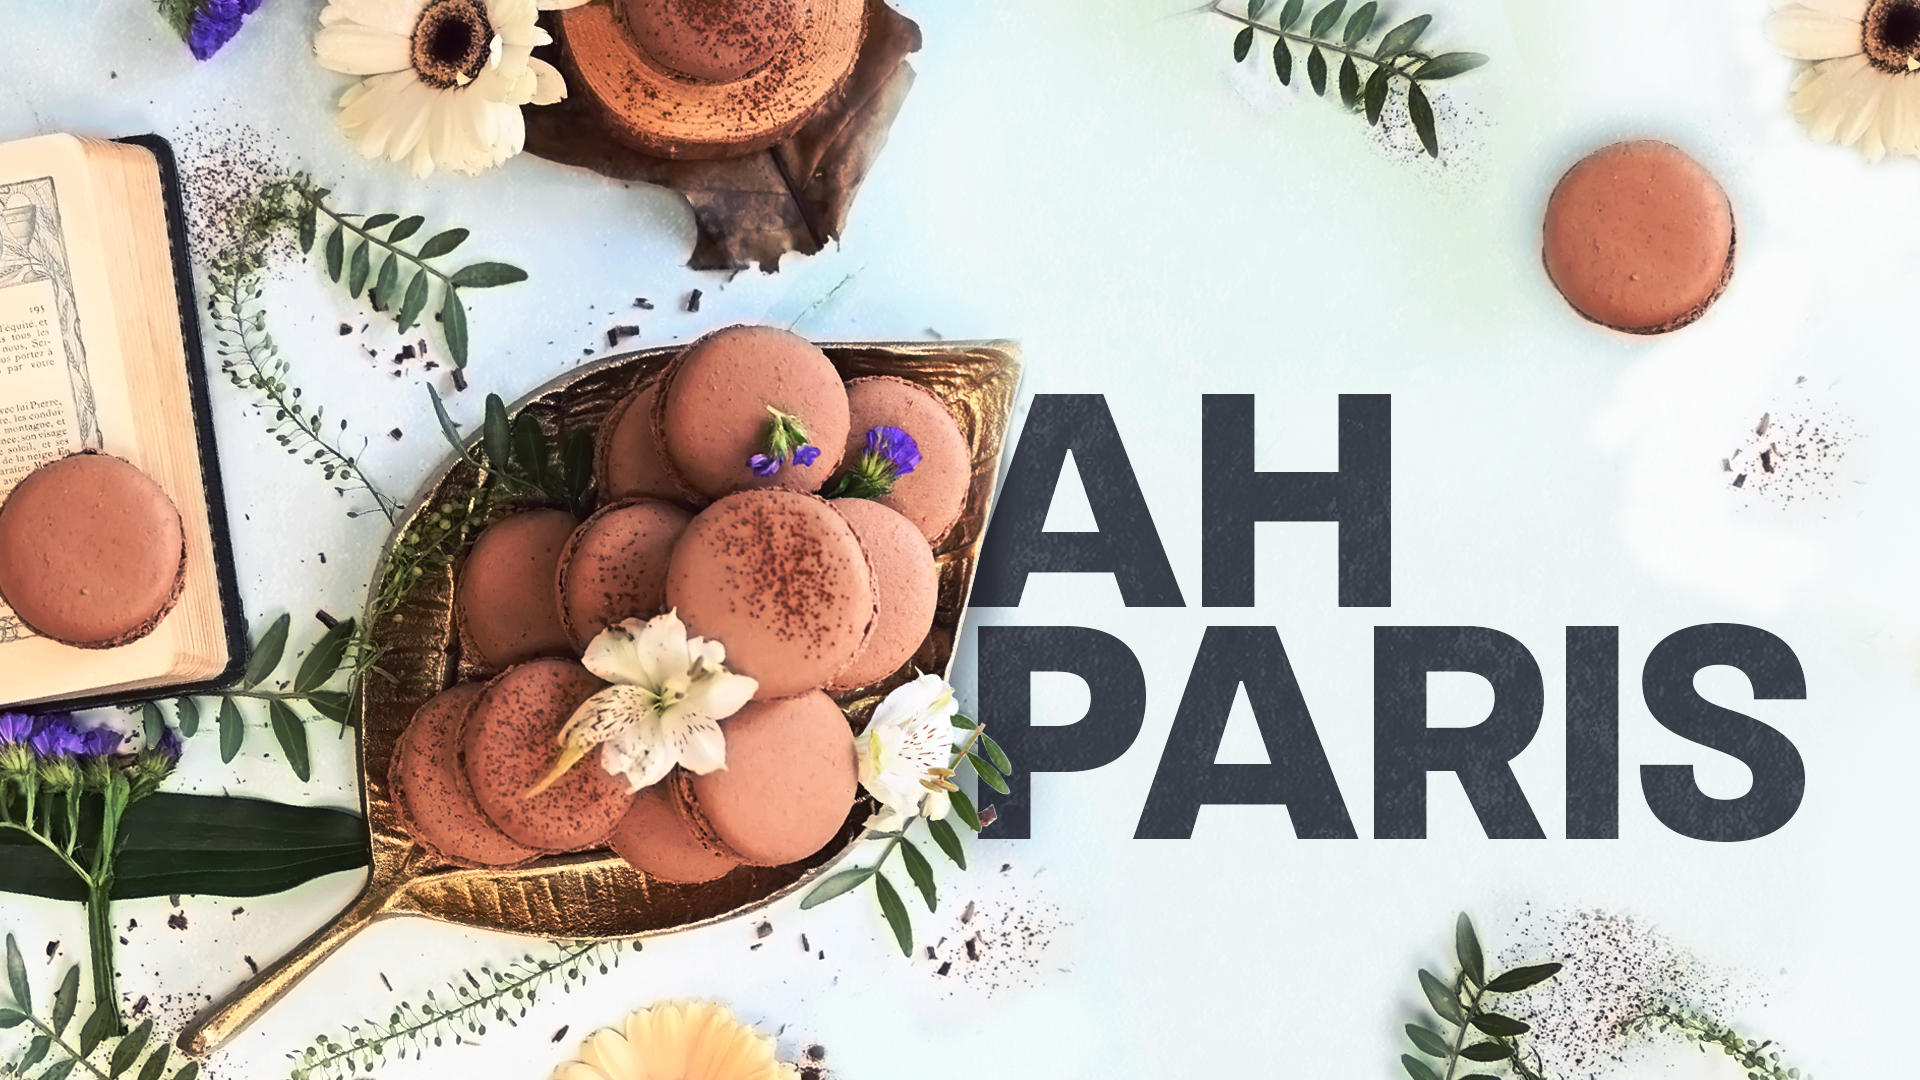 Projet "AH Paris" - Agence Kristel food com & event